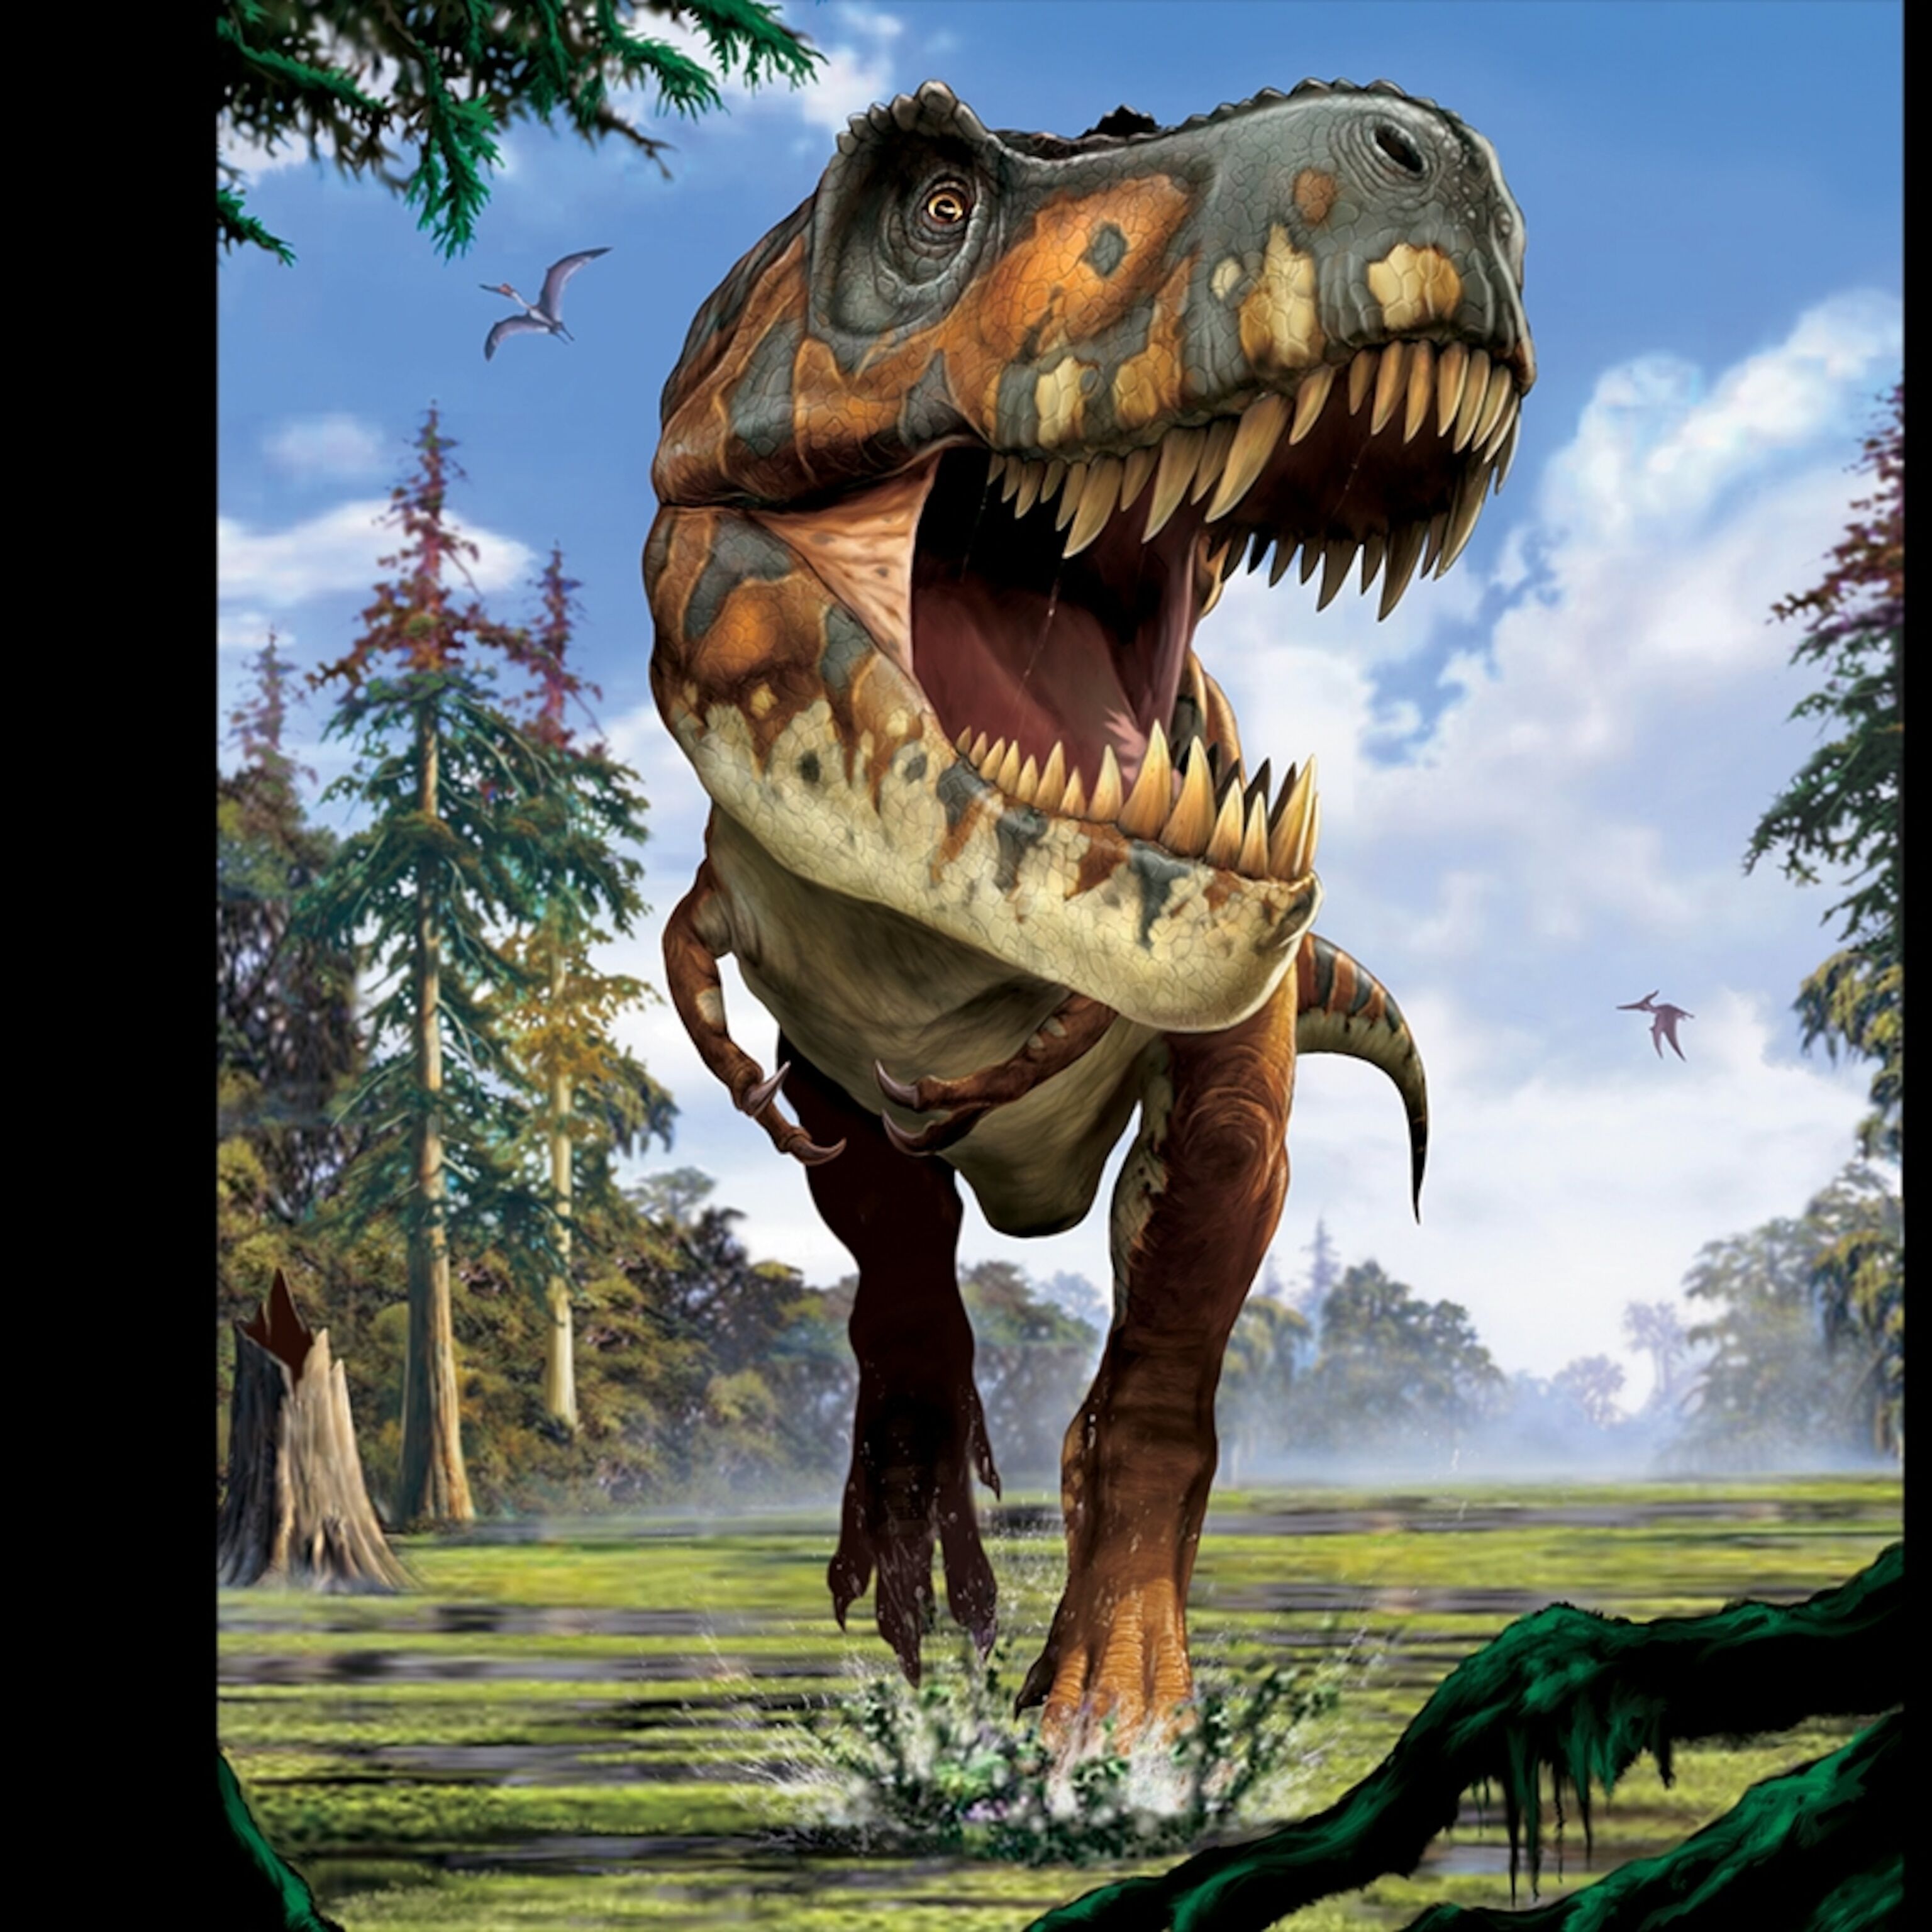 Tyrannosaurus rex - Wiktionary, the free dictionary